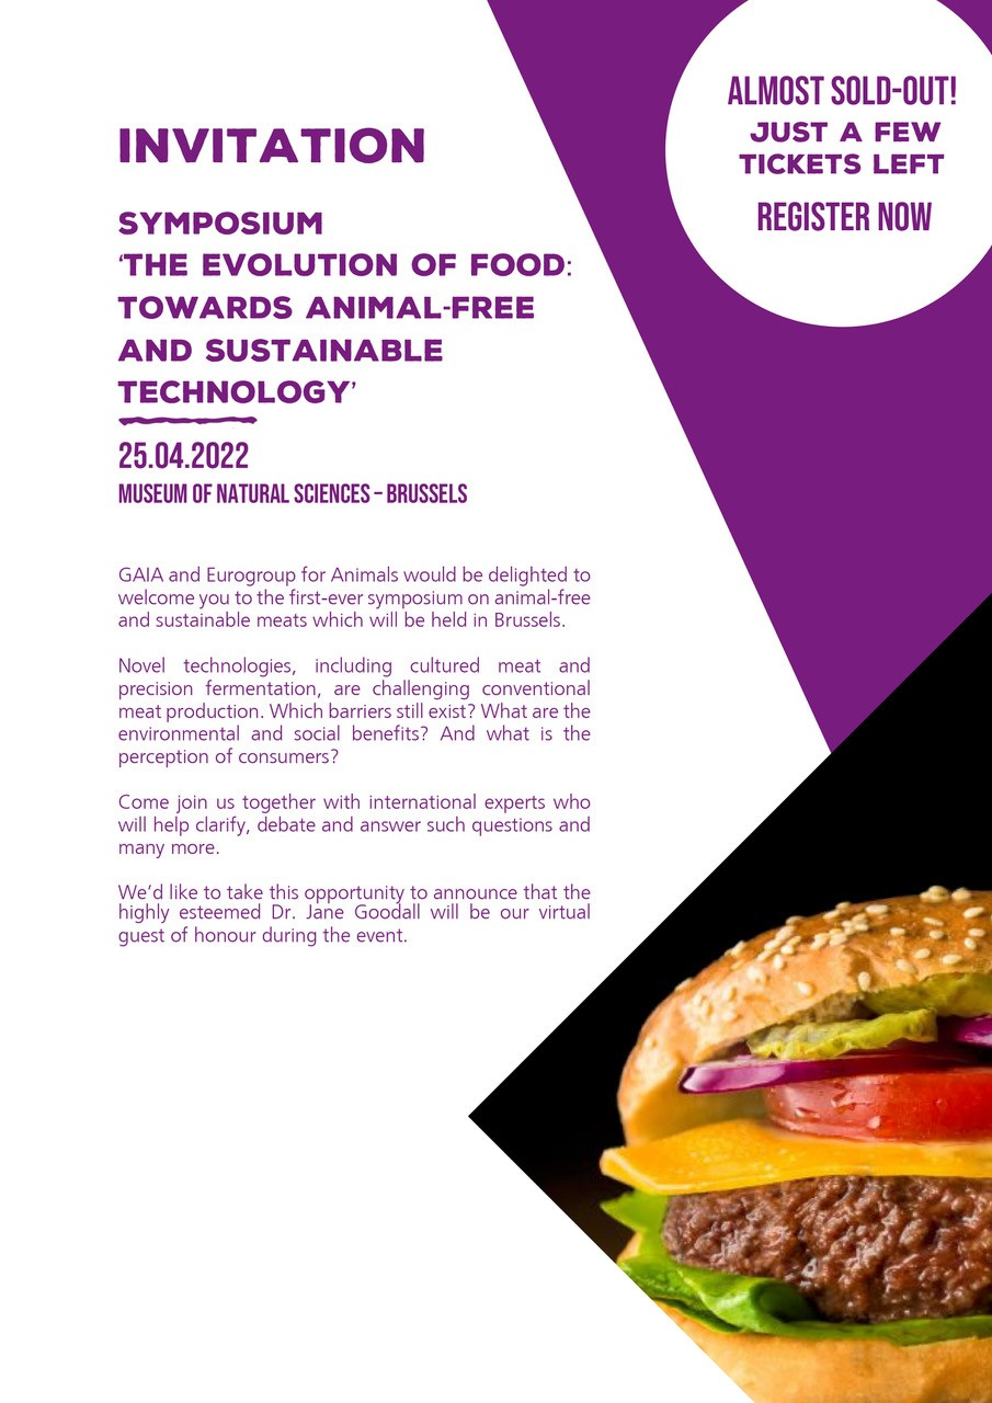 Uitnodiging Symposium (25/4) 'The Evolution of Food: Towards Animal-Free and Sustainable Technology'